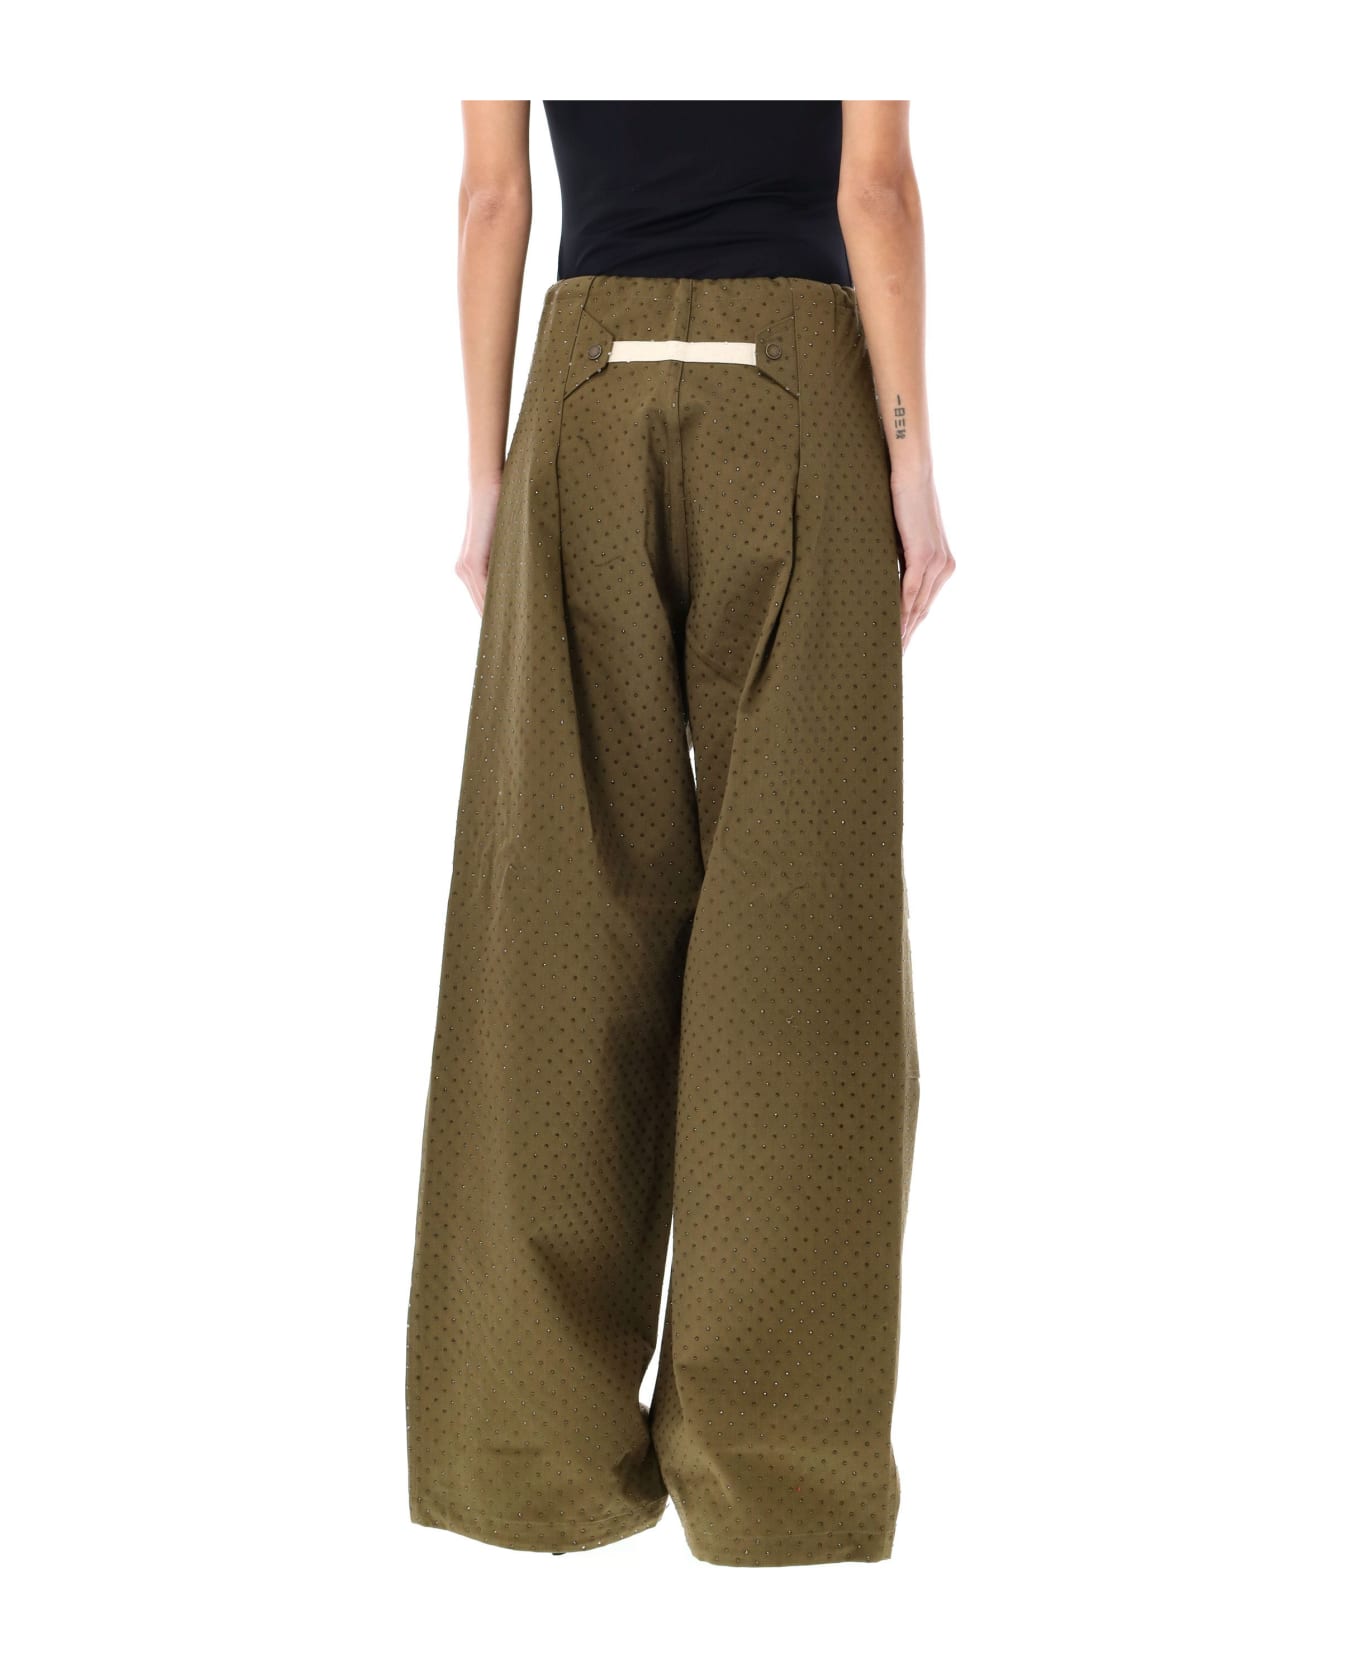 DARKPARK Daisy Crystal Studded Pants - MILITARY GREEN